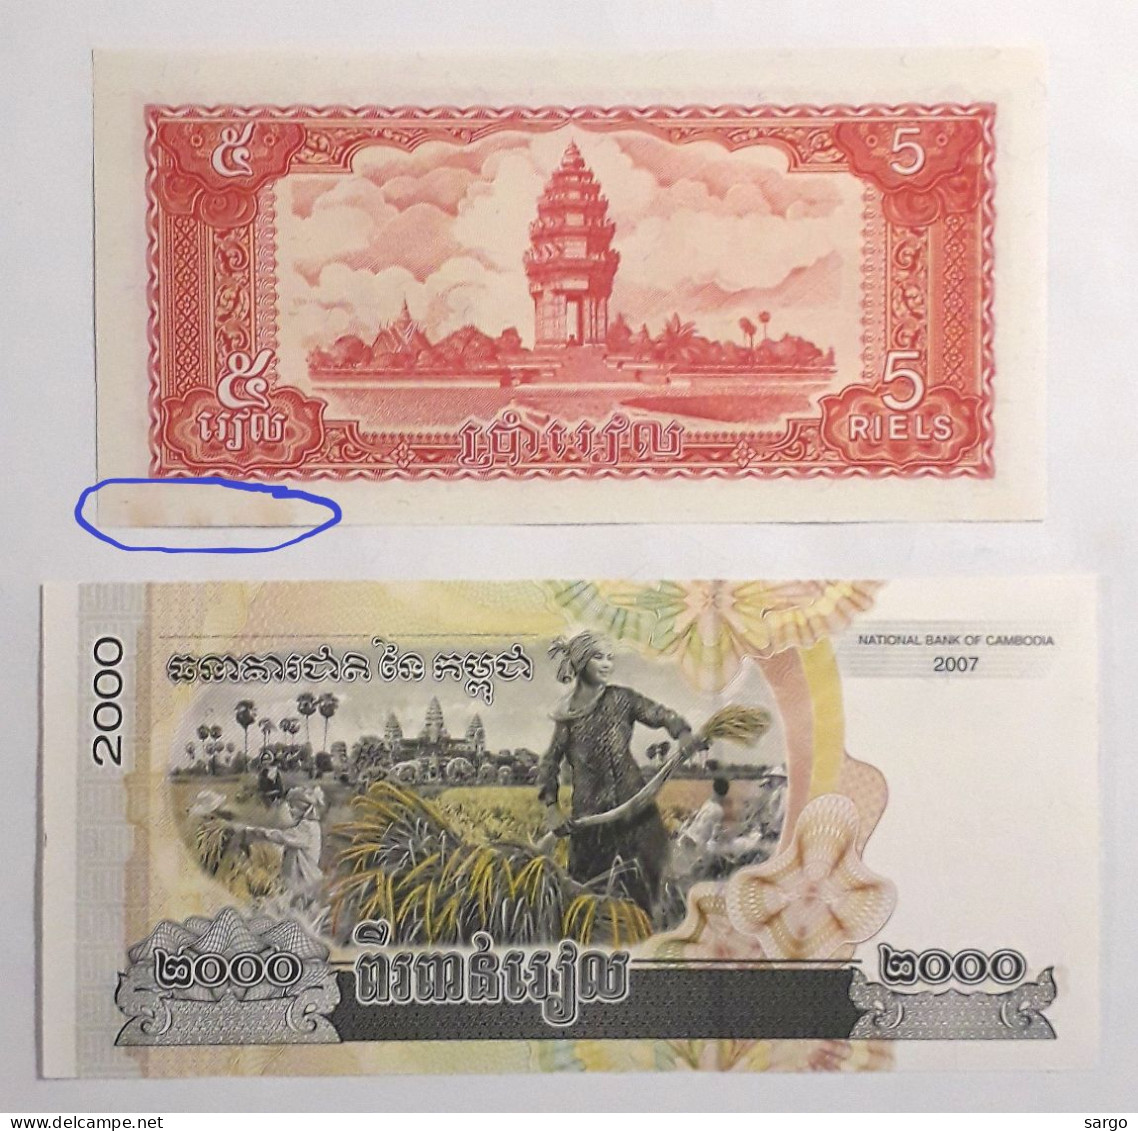 CAMBODIA - 5,2.000 RIELS - PIC 33, PIC 59 (1997-2007) - UNC - 2 PCS - BANKNOTES - PAPER MONEY - CARTAMONETA - - Kambodscha